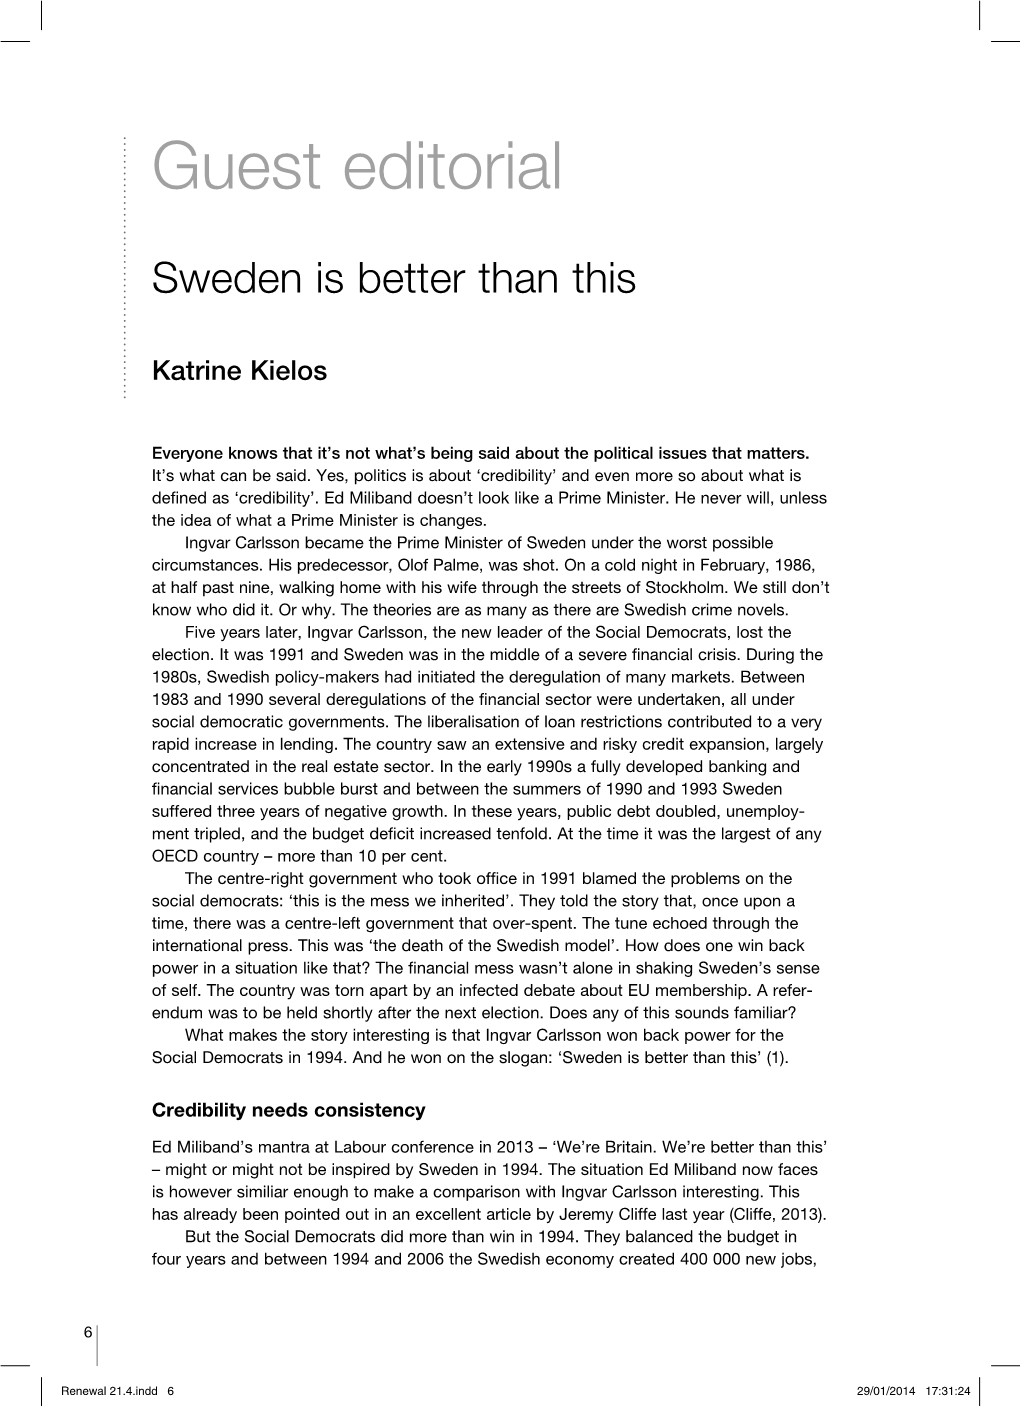 Katrine Kielos, Sweden Is Better Than This